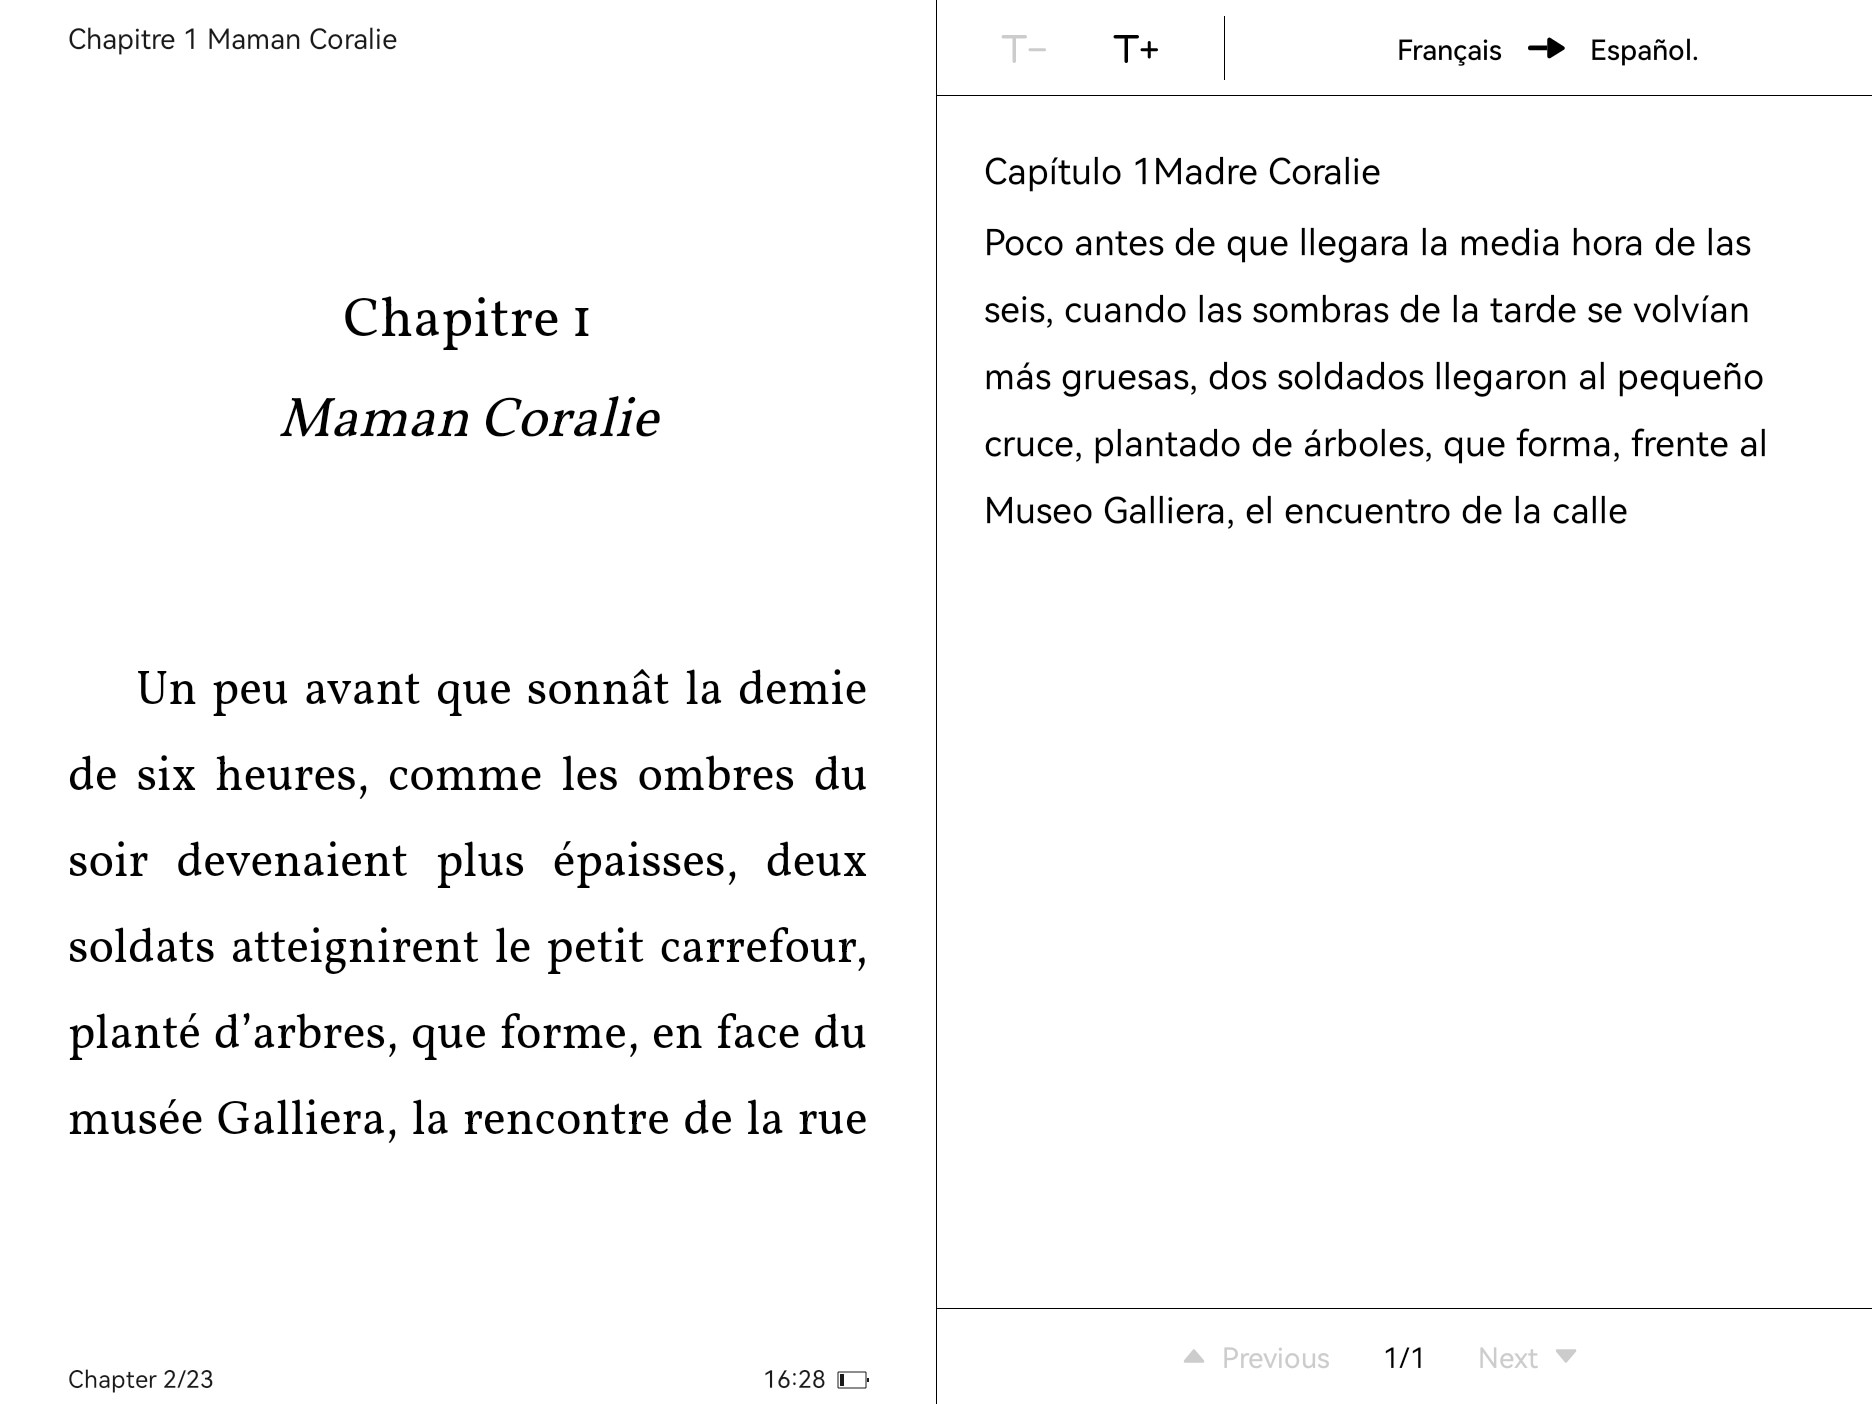 huawei matepad paper screenshot splitscreen translation